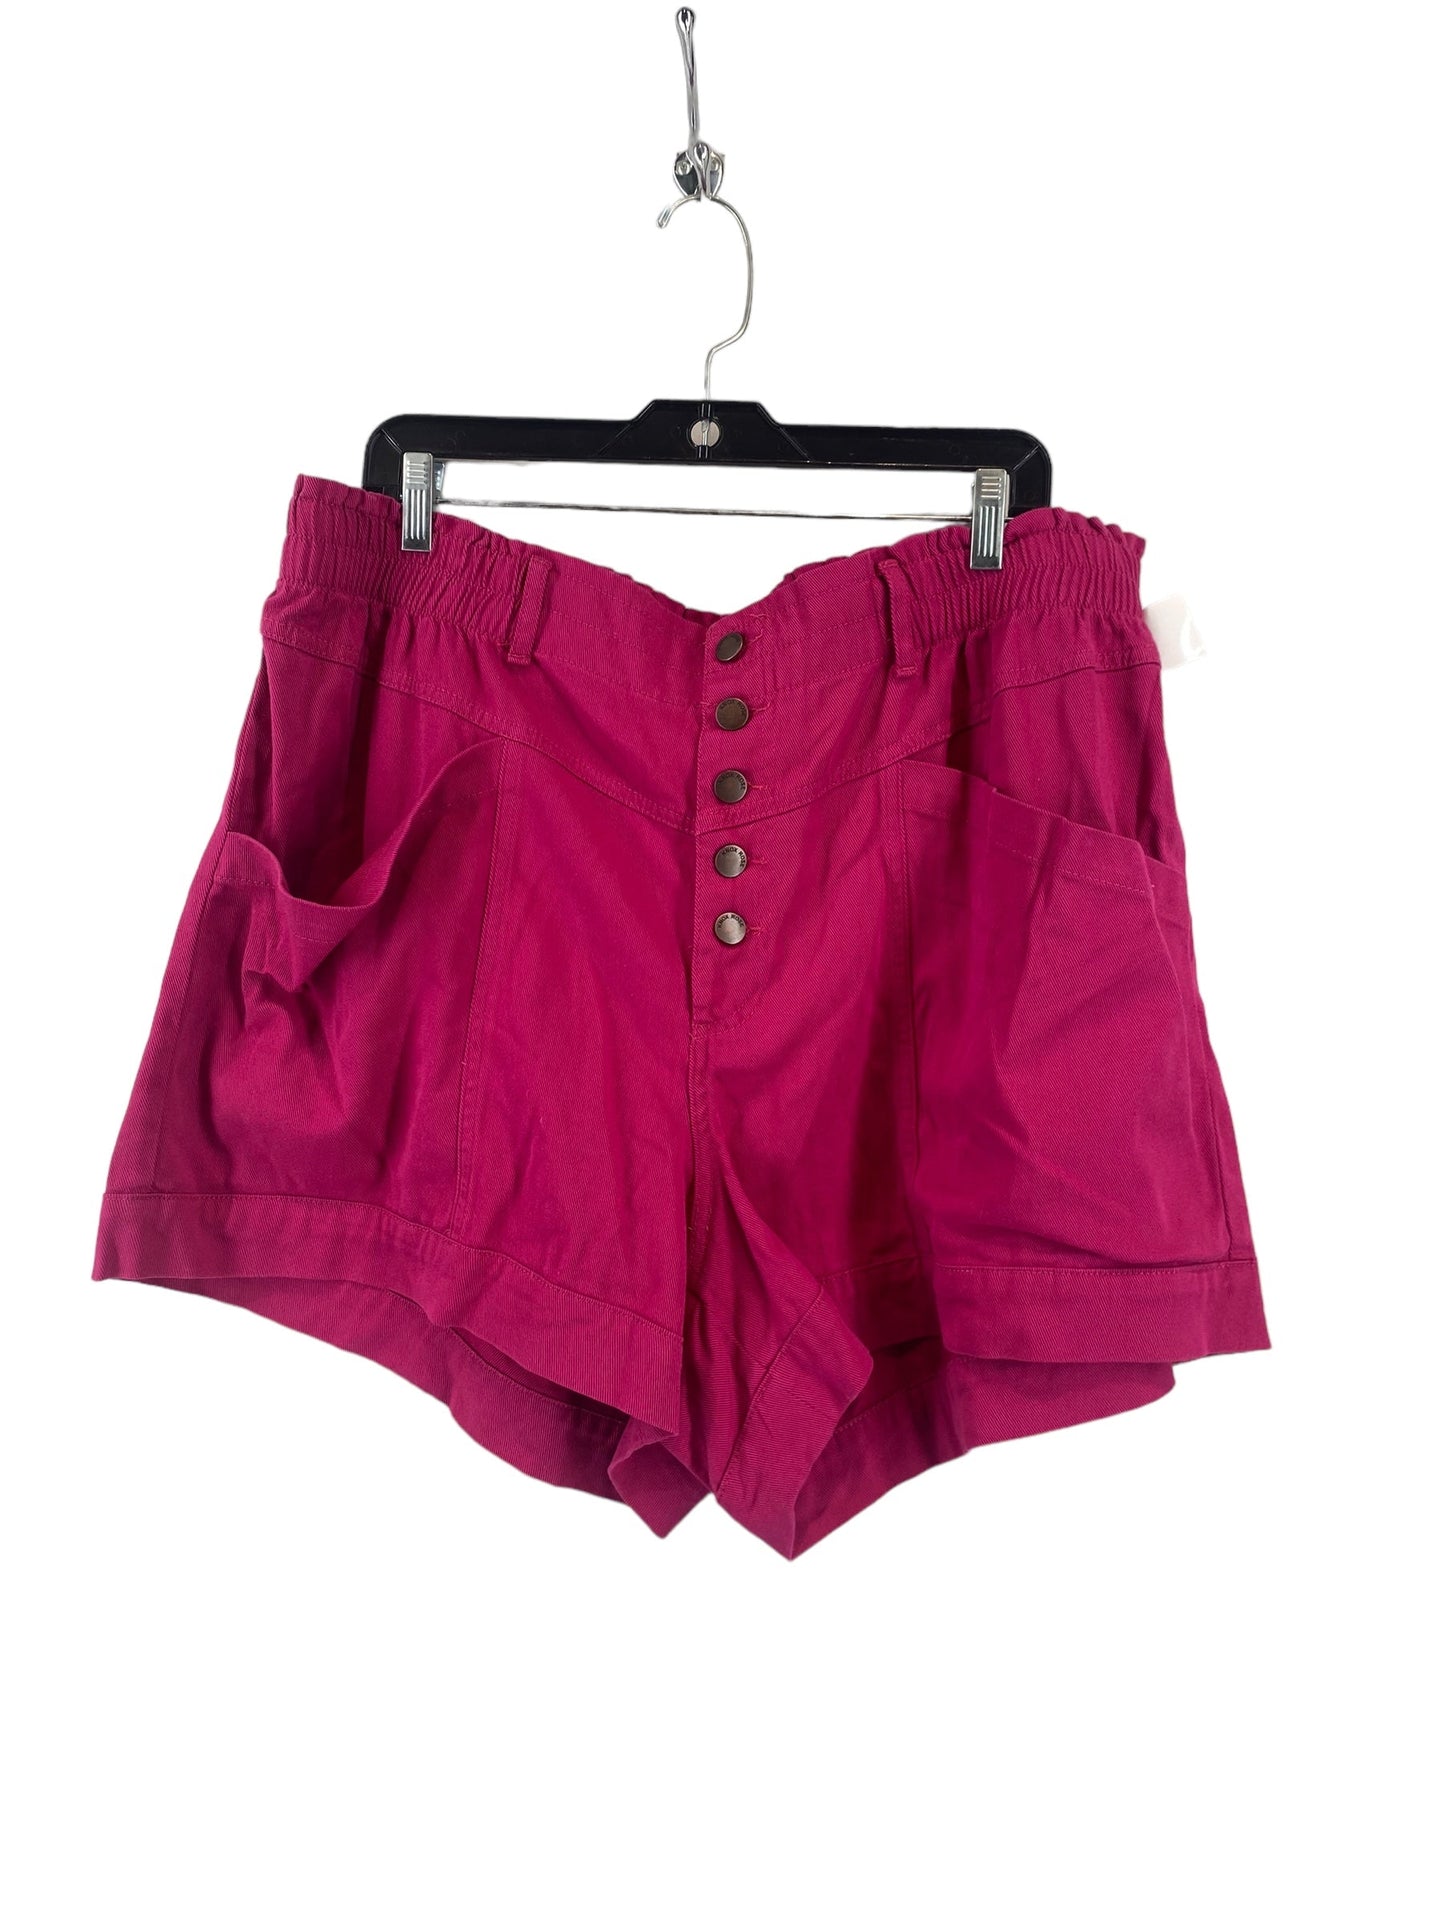 Pink Shorts Knox Rose, Size Xxl